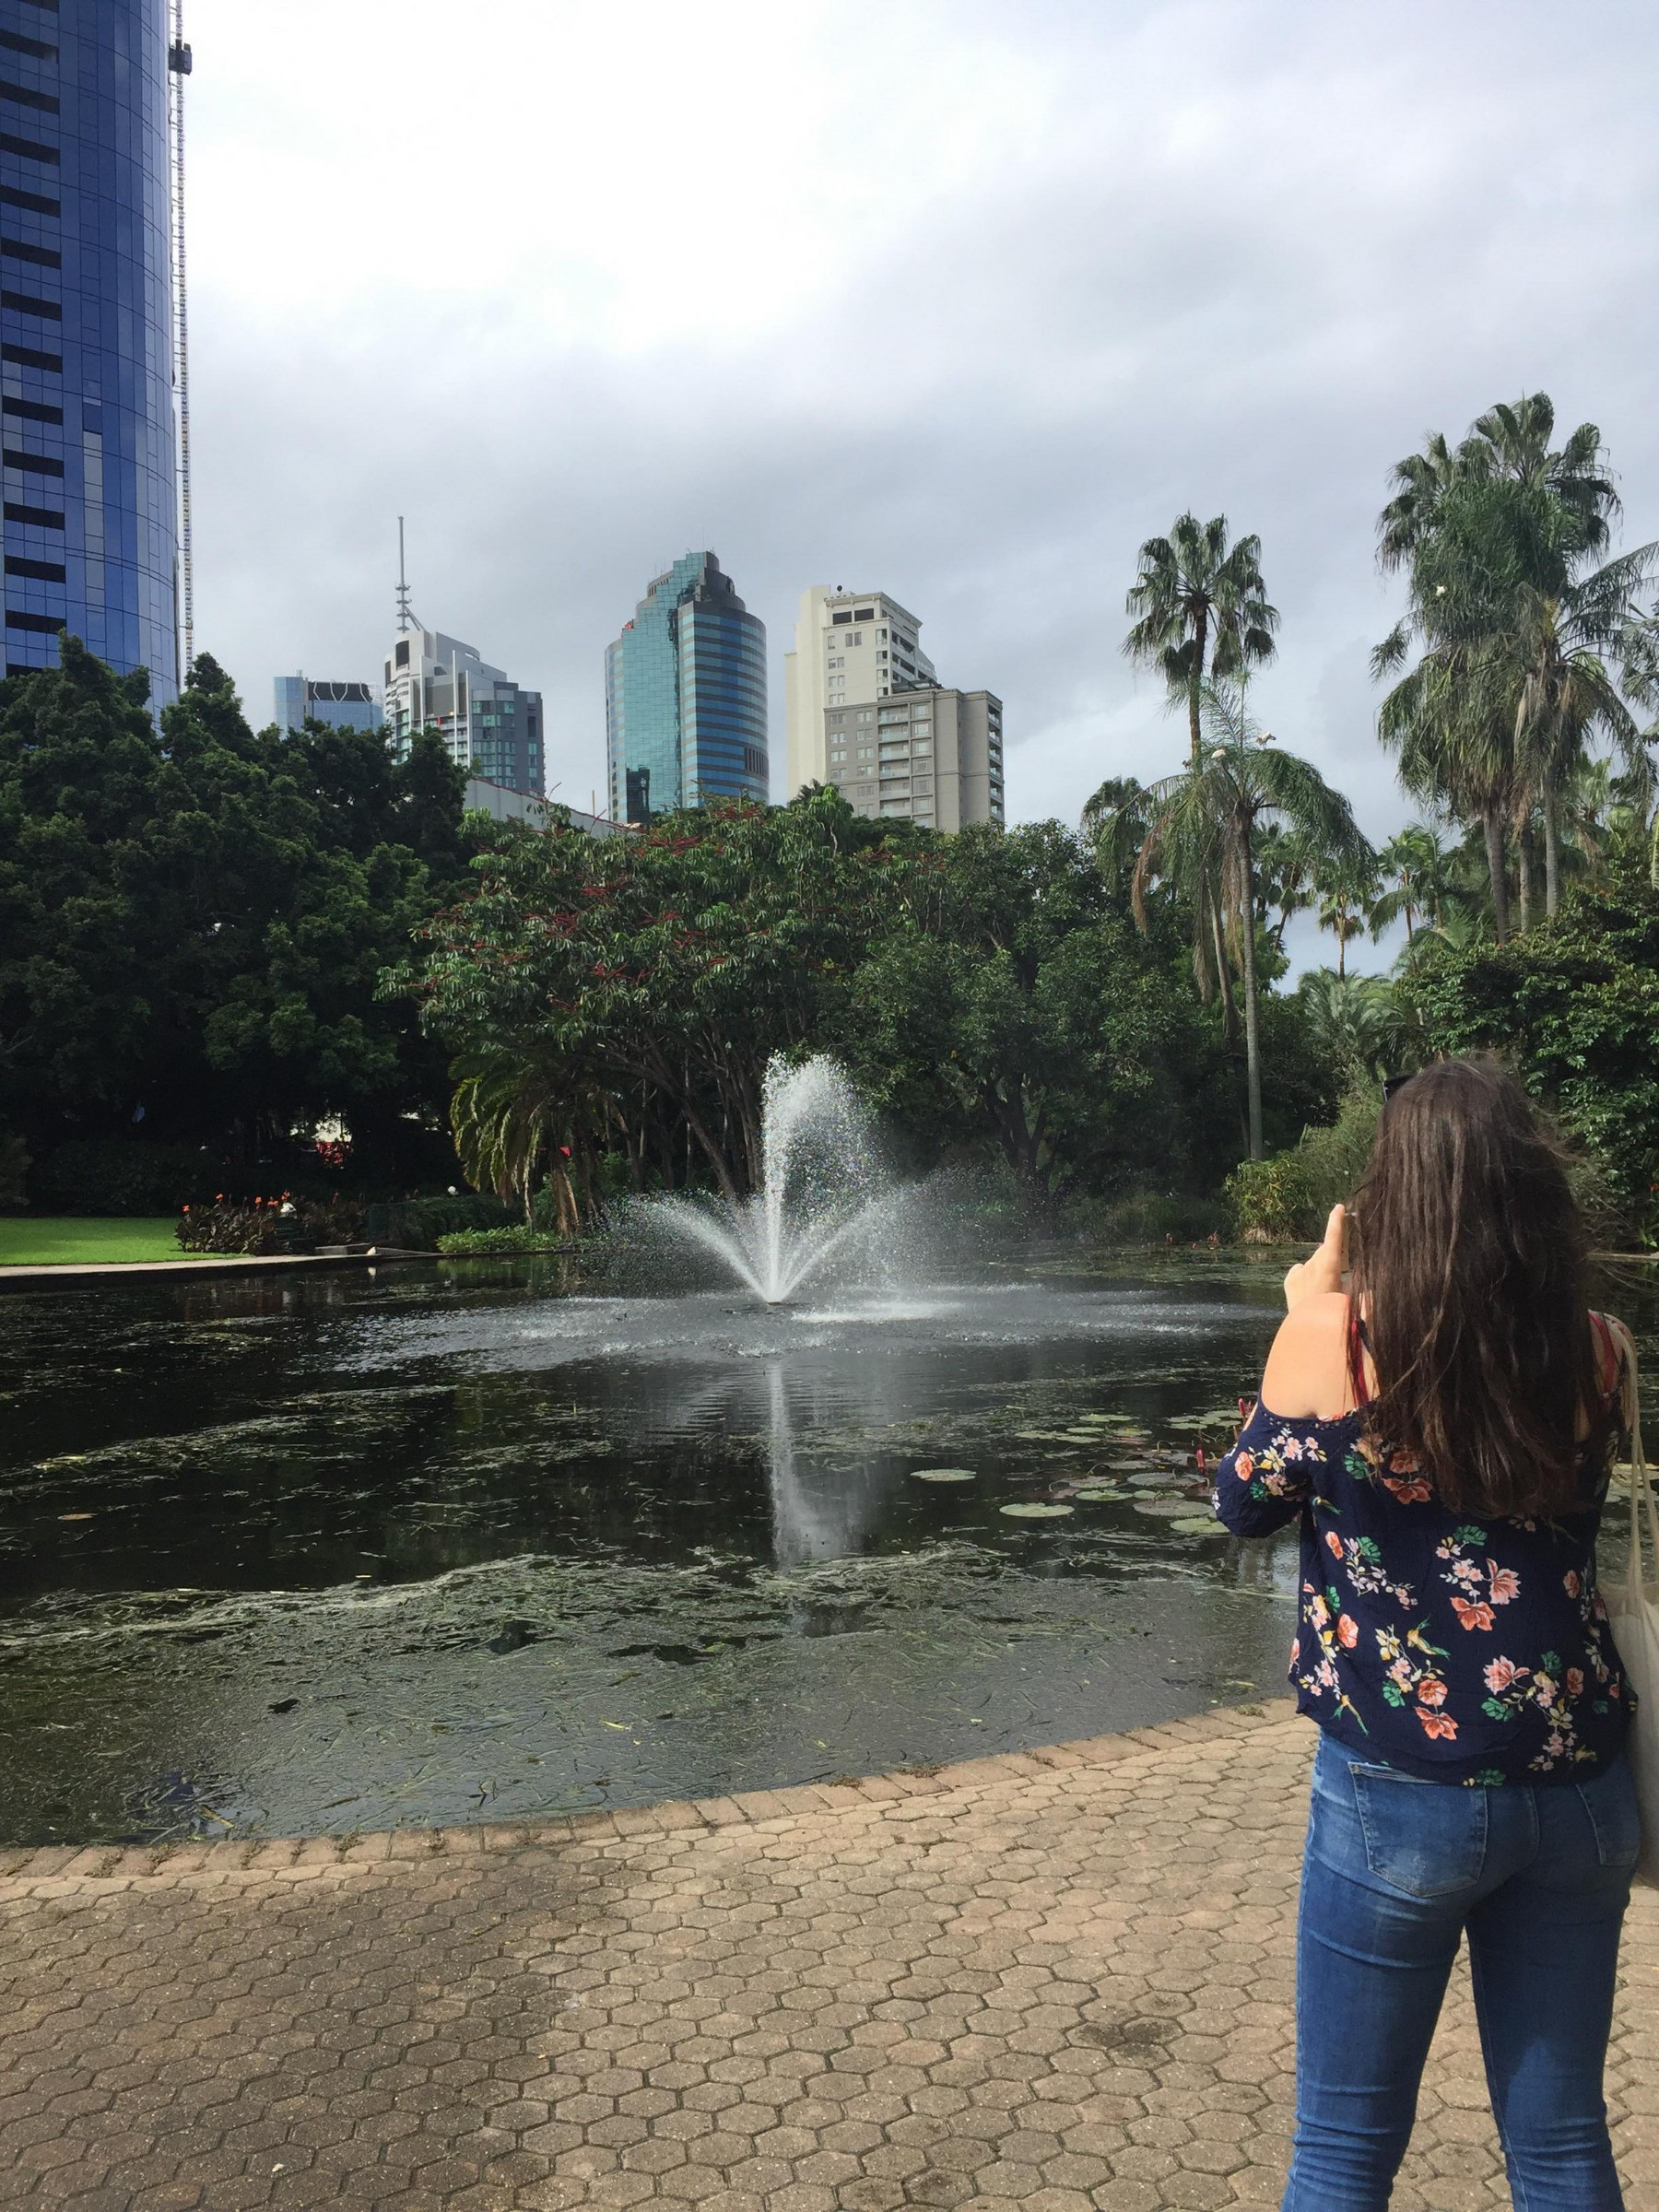 Botanical gardens Brisbane | Photo